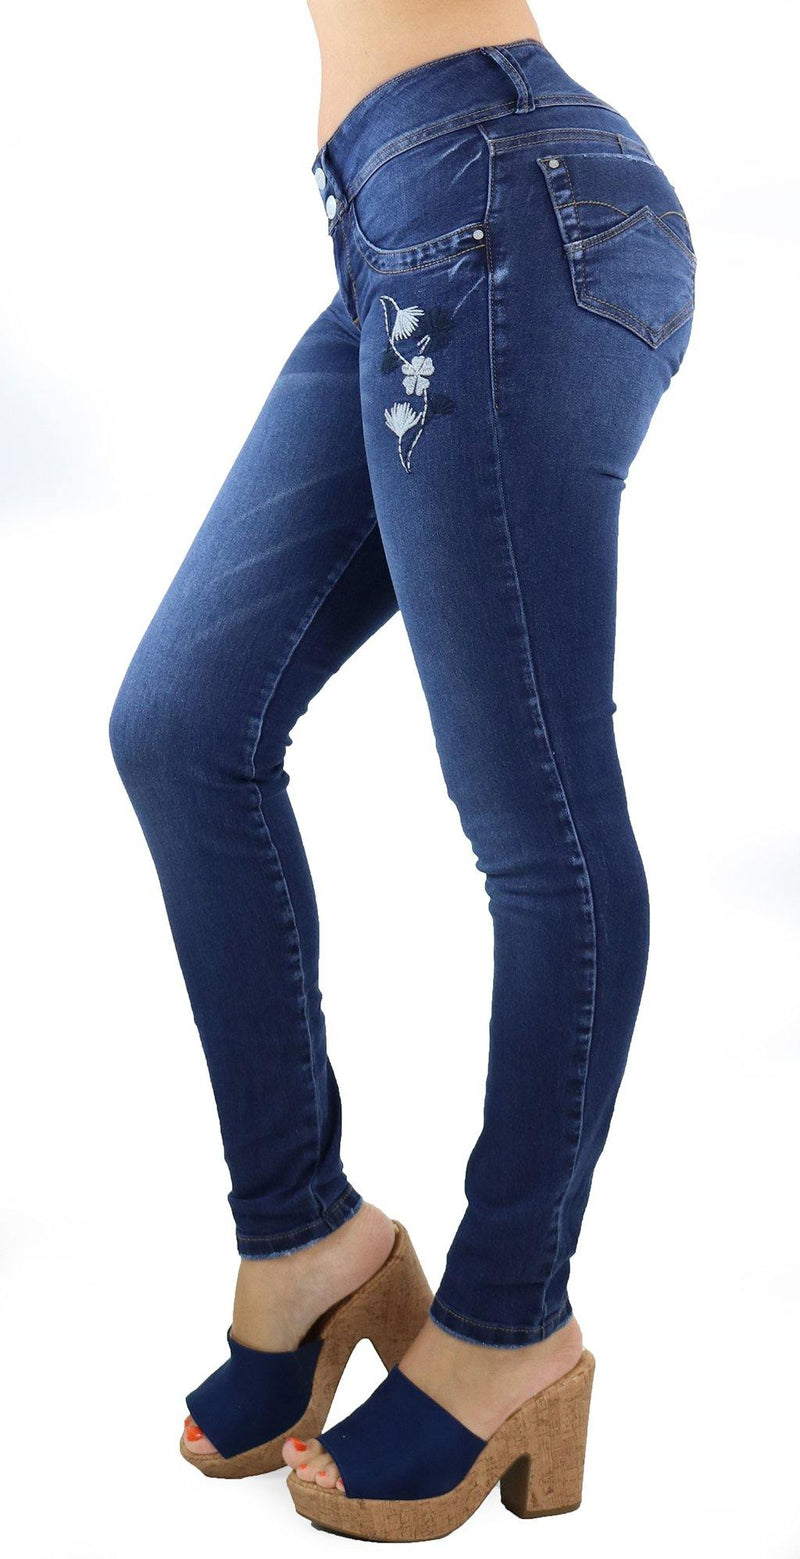 19018 Skinny Jeans Women Maripily Rivera